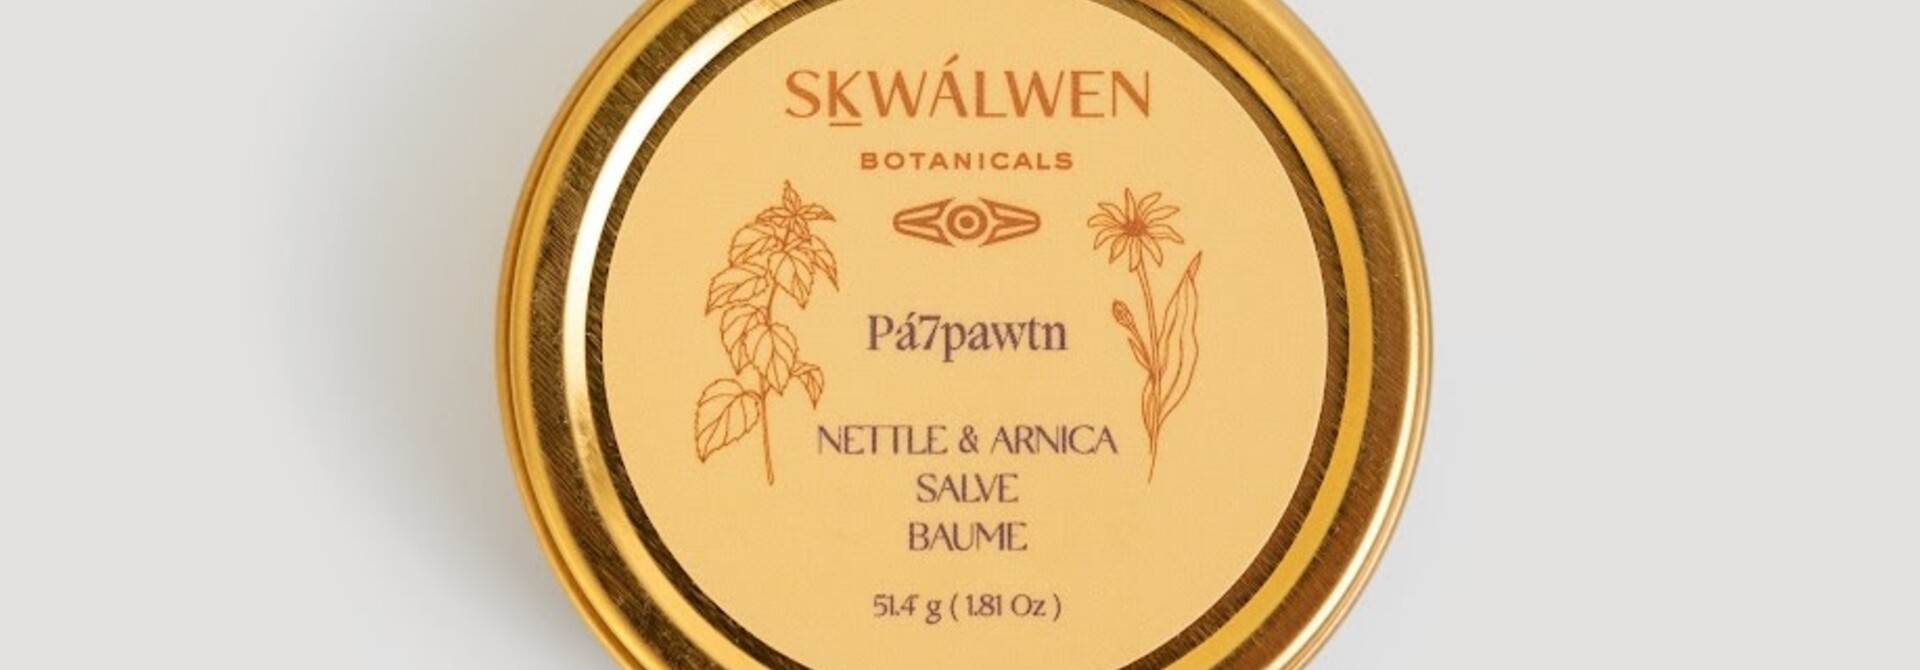 Pá7pawtn Nettle and Arnica Salve by Skwalwen Botanicals